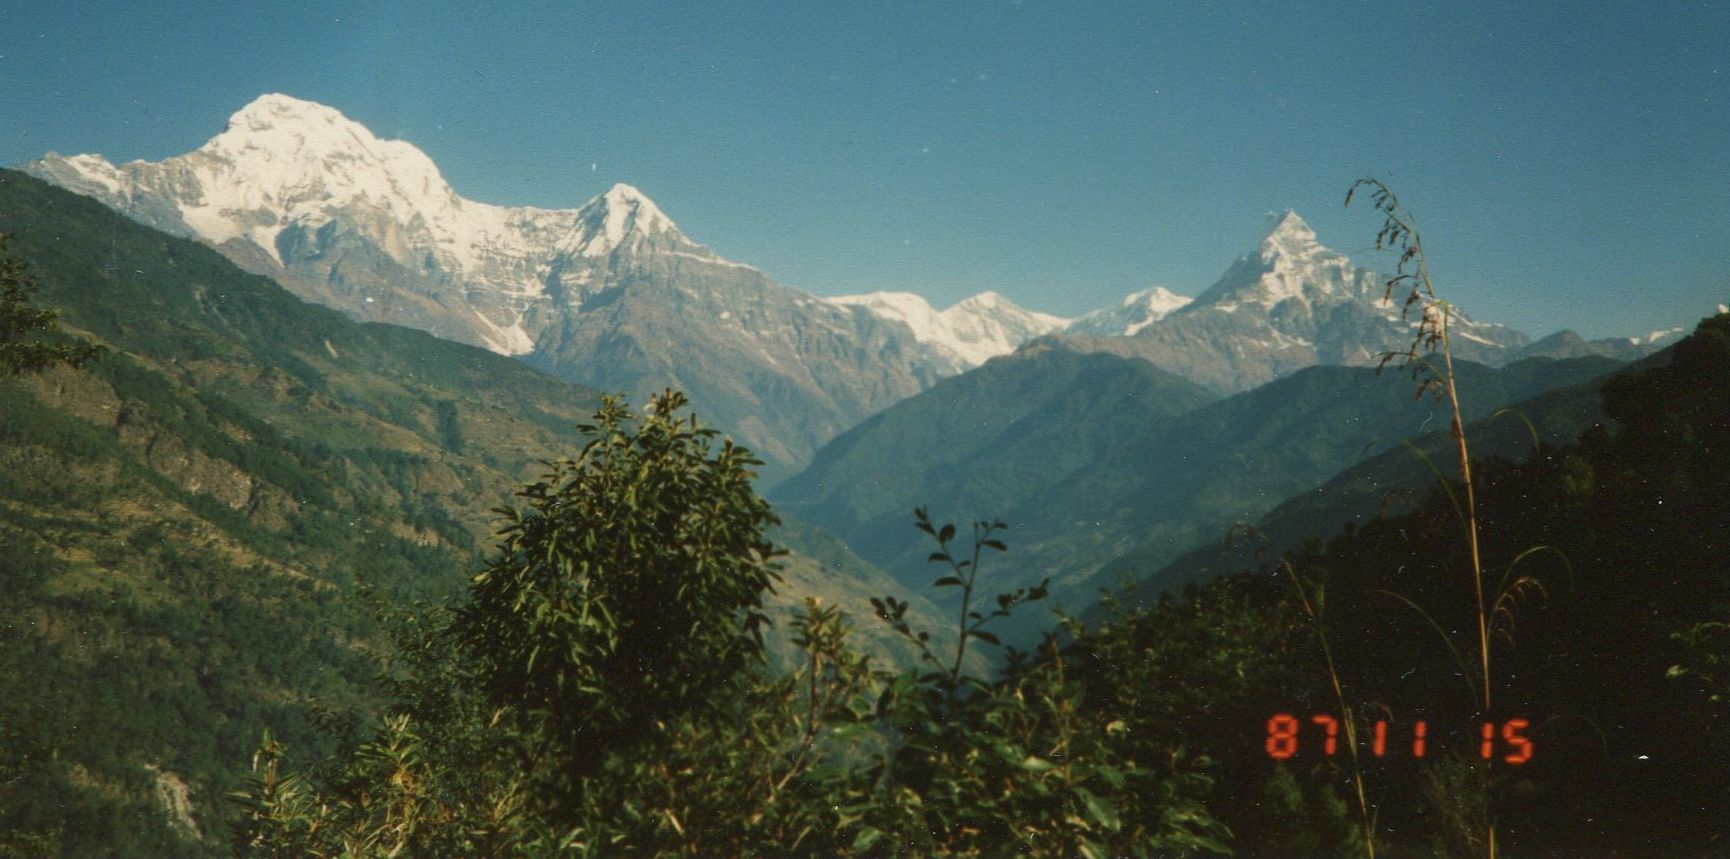 Annapurna South Peak, Hiunchuli and Mount Macchapucchre ( Fishtail Mountain )